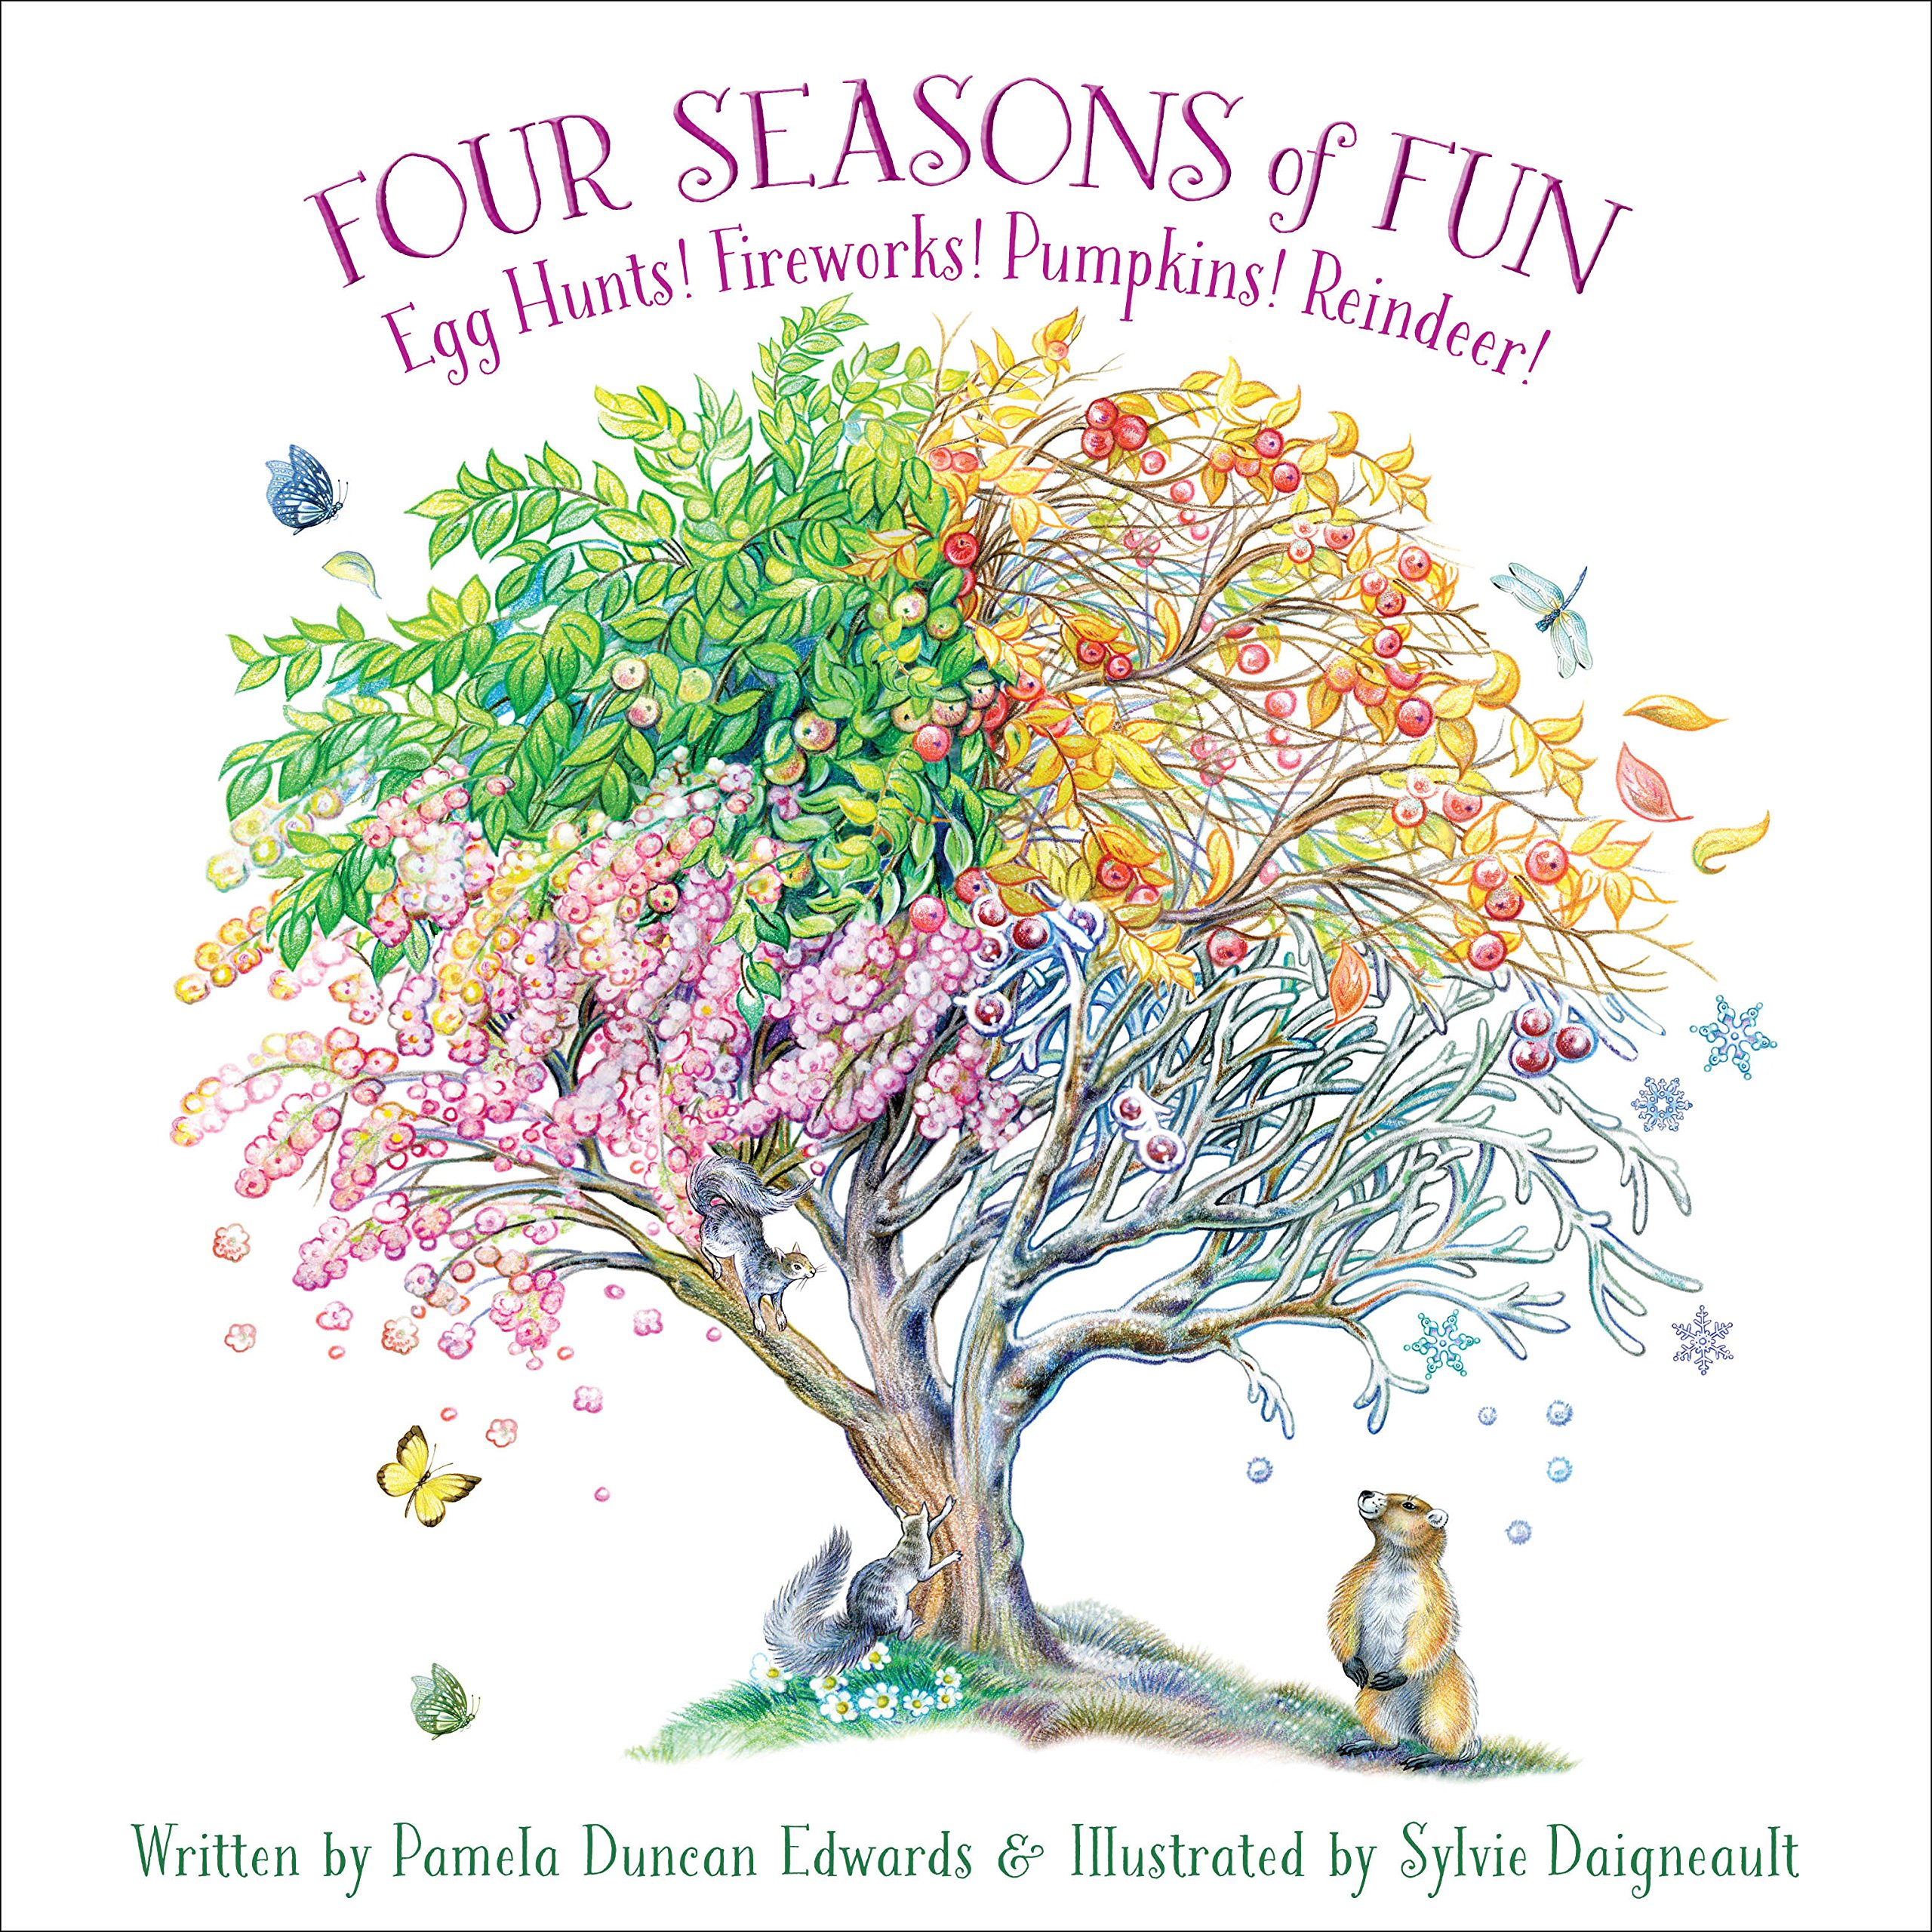 Four Seasons of Fun Picture Book - Egg Hunts! Fireworks! Pumpkins